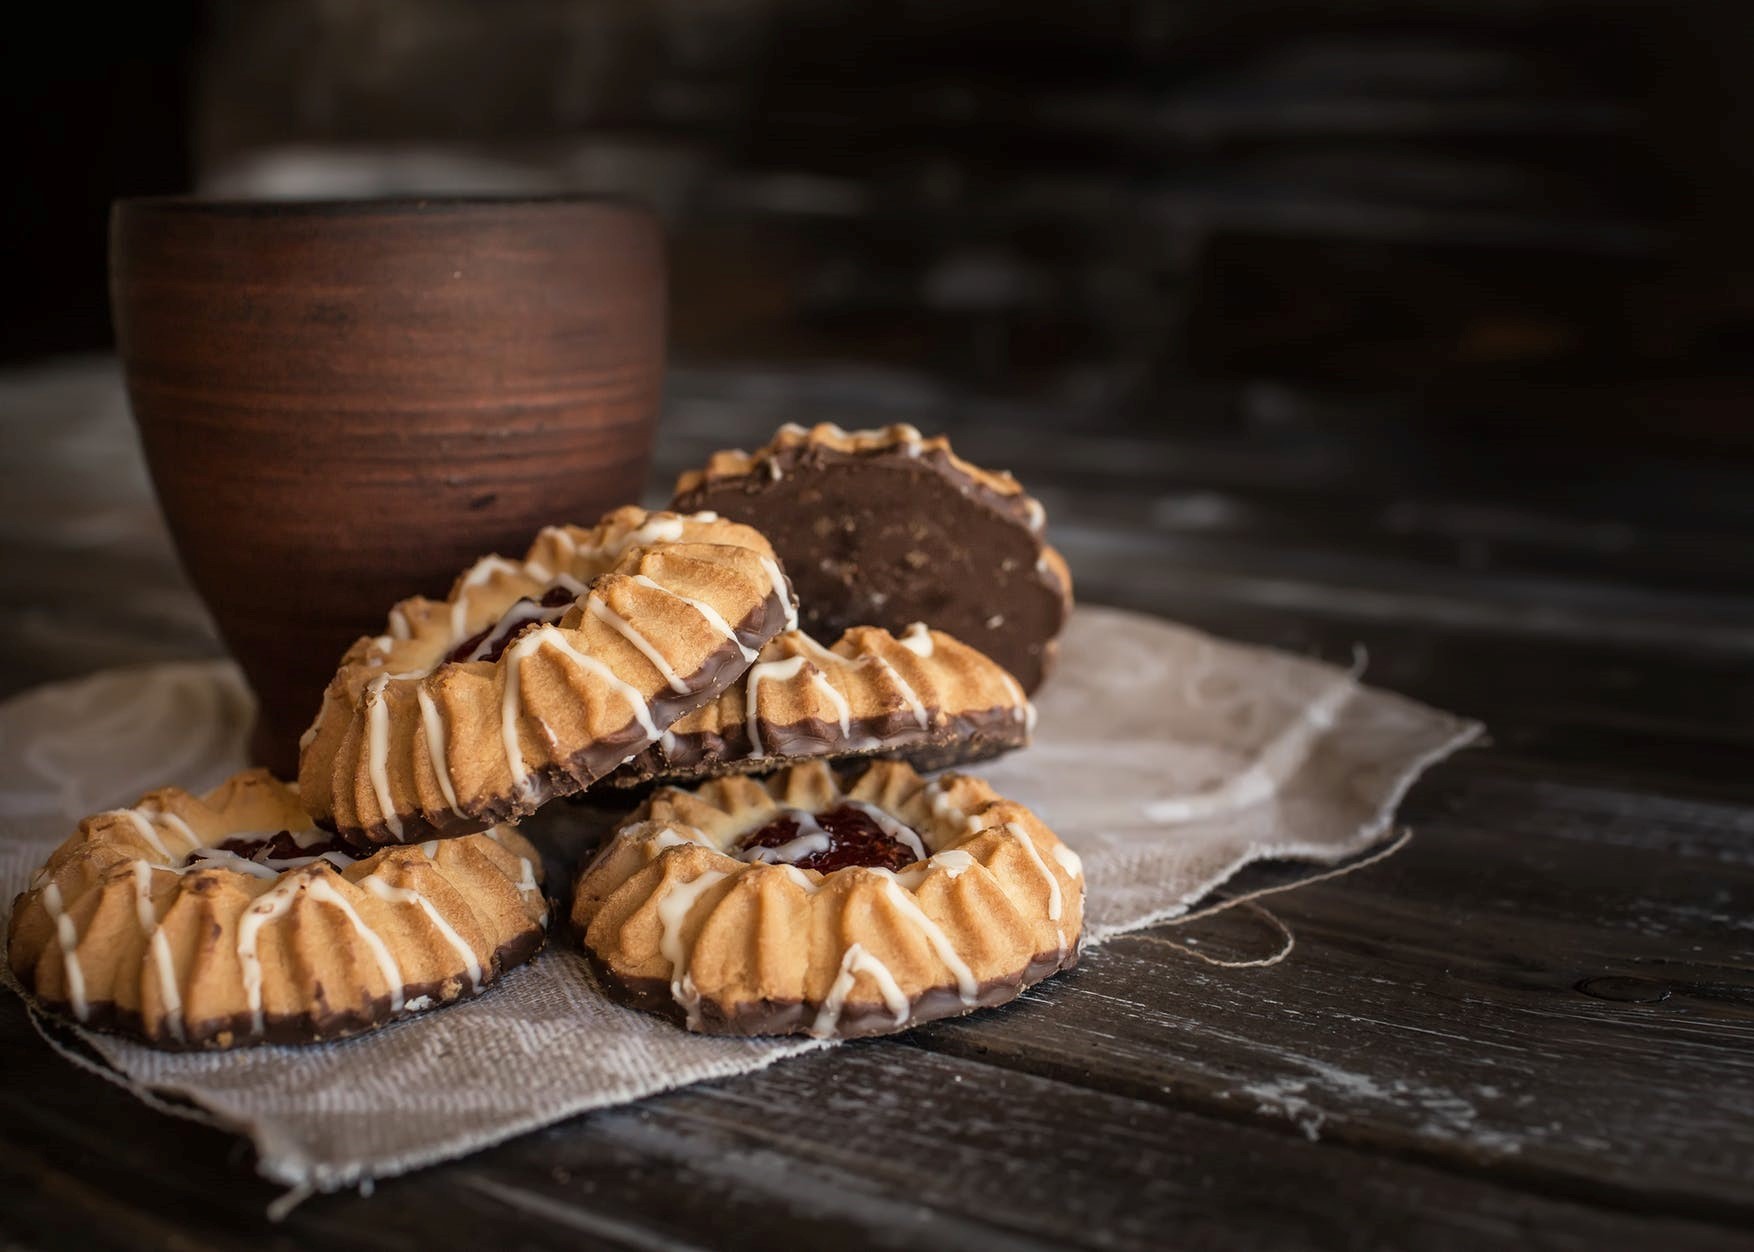 Sample of Chocolate Almond Cookies